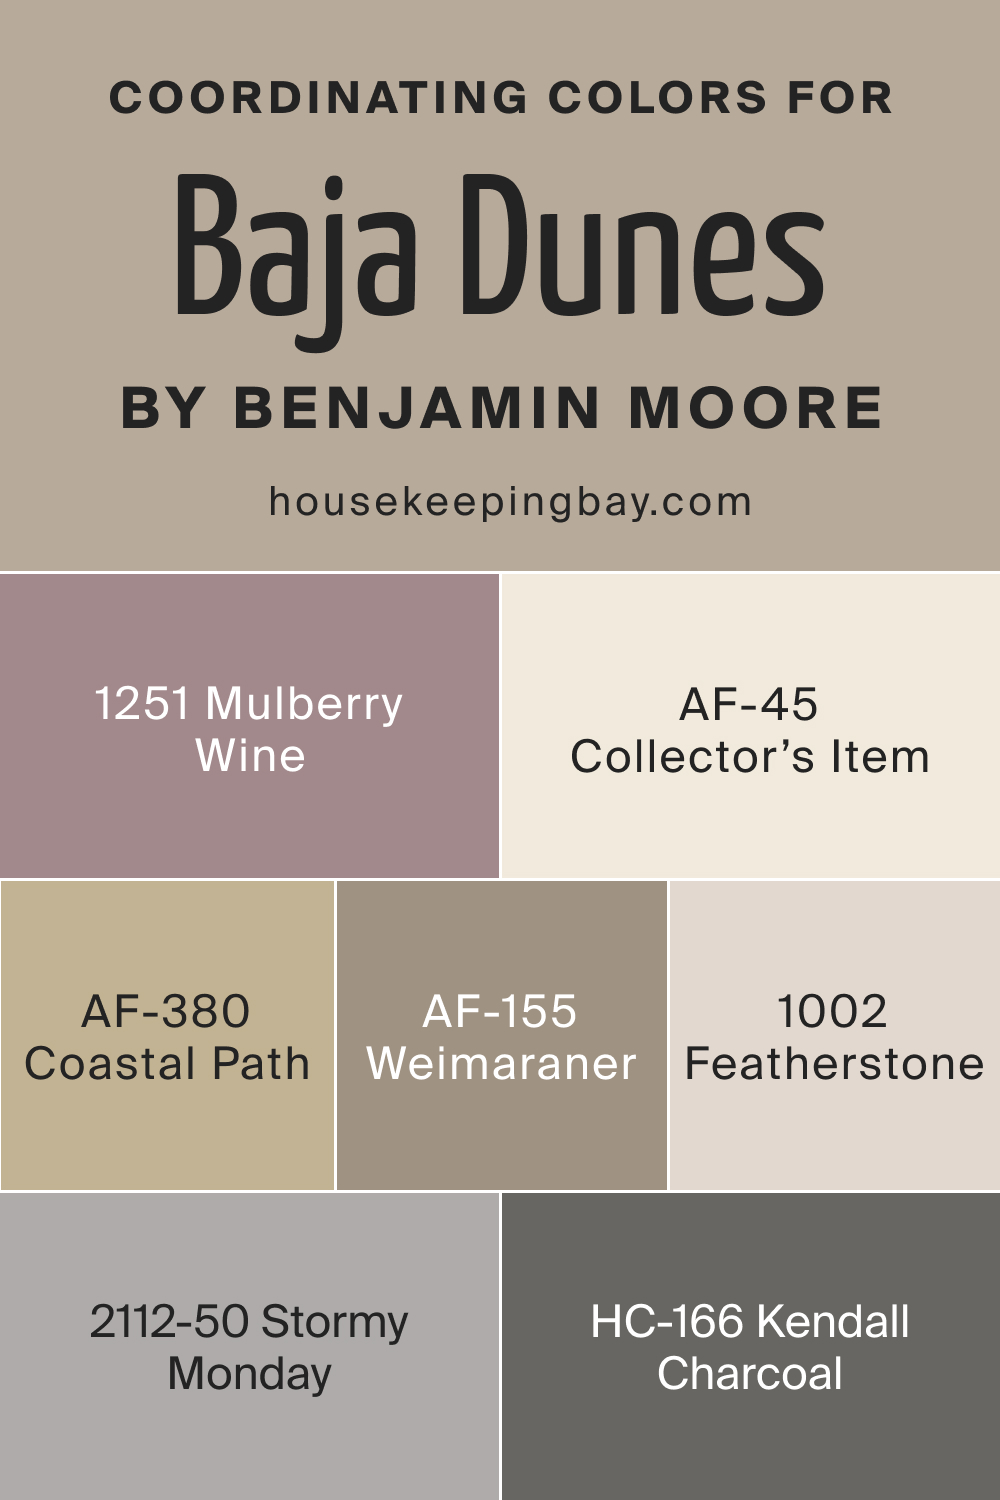 Coordinating Colors for BM Baja Dunes 997 by Benjamin Moore